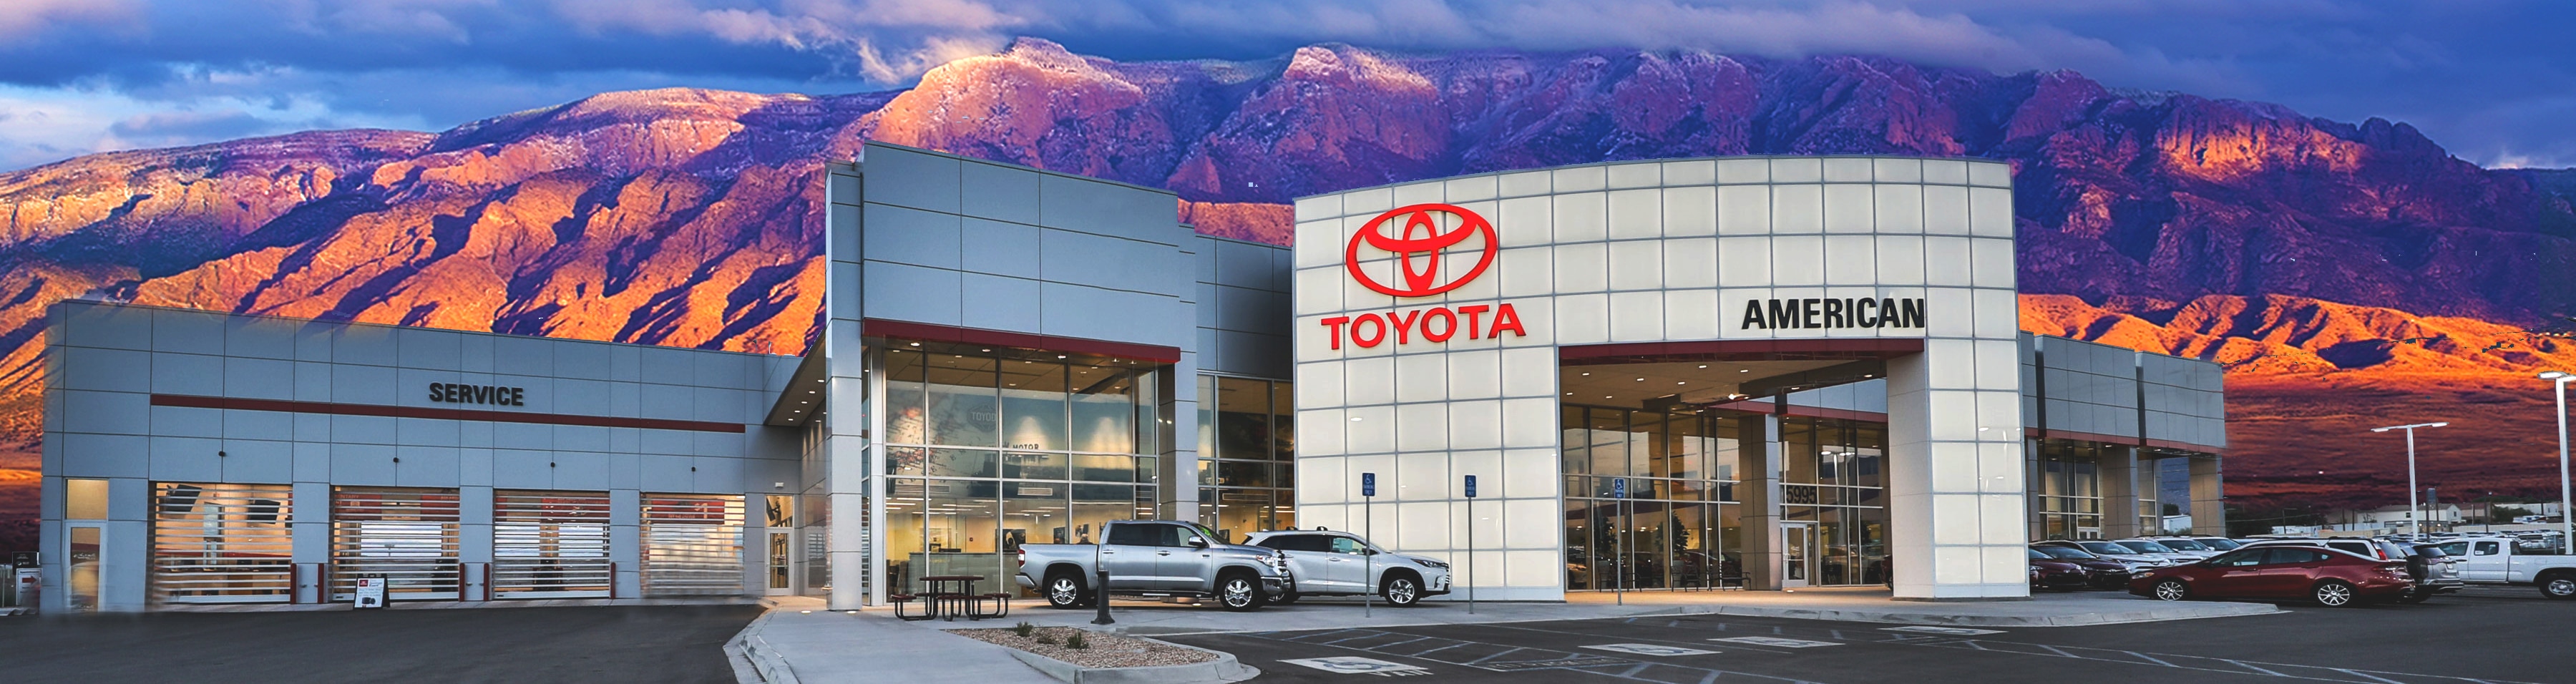 American Toyota Dealership